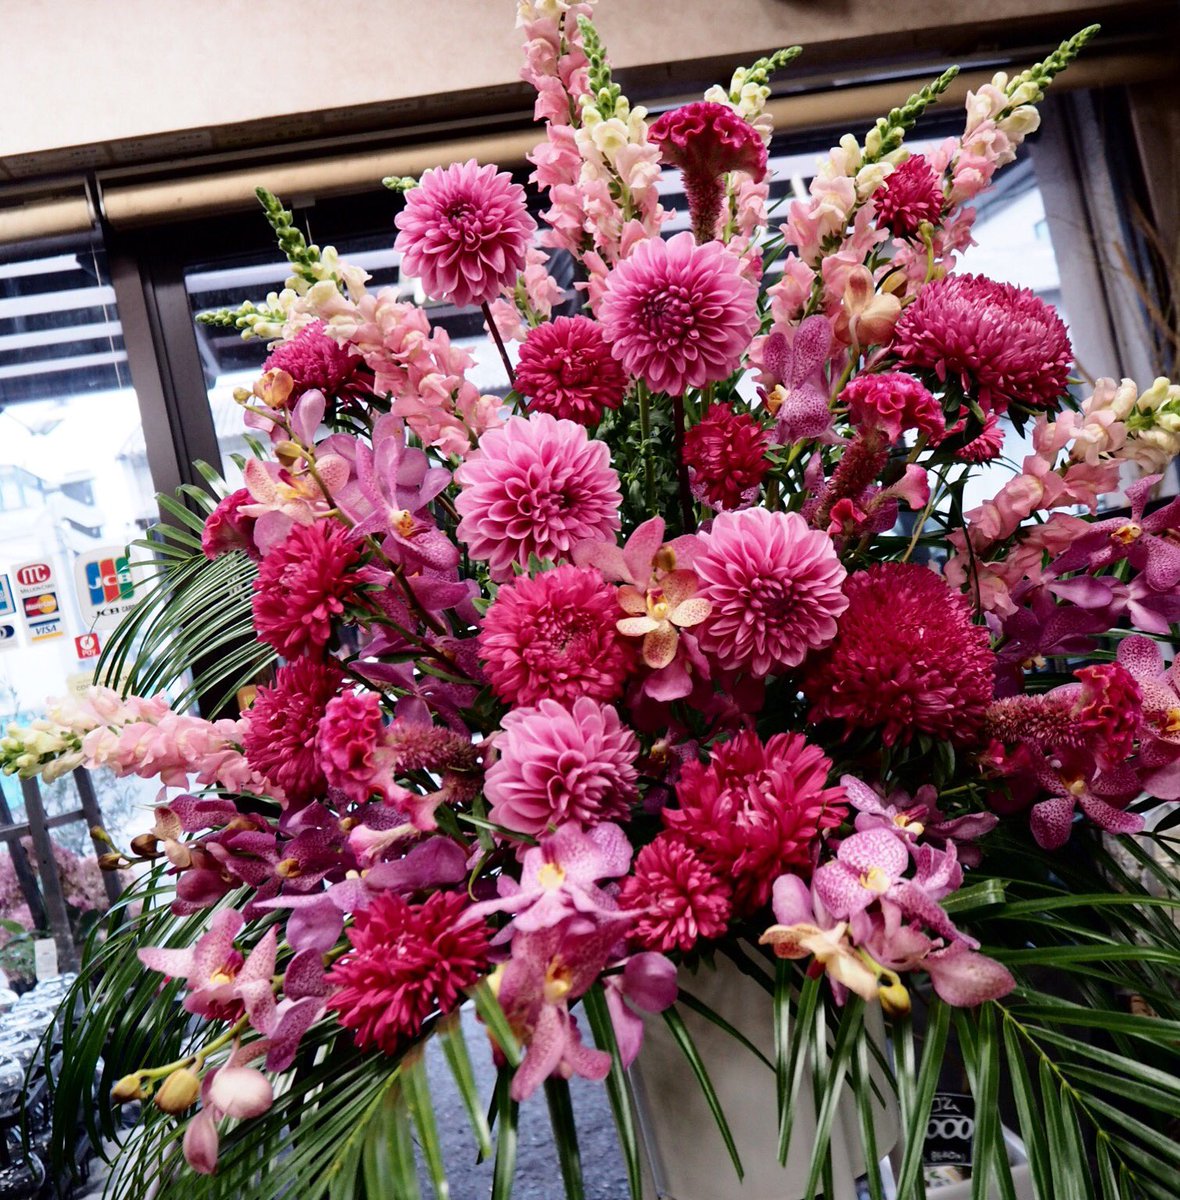 Flower Liberte リベルテ V Twitter Stand Flower ピンクがイメージカラーのお店の周年お祝いにお届けさせていただきました おめでとうございます 益々のご繁栄をお祈りいたします Flower Arrangement Gift Standflower お祝い 周年祝い スタンド花